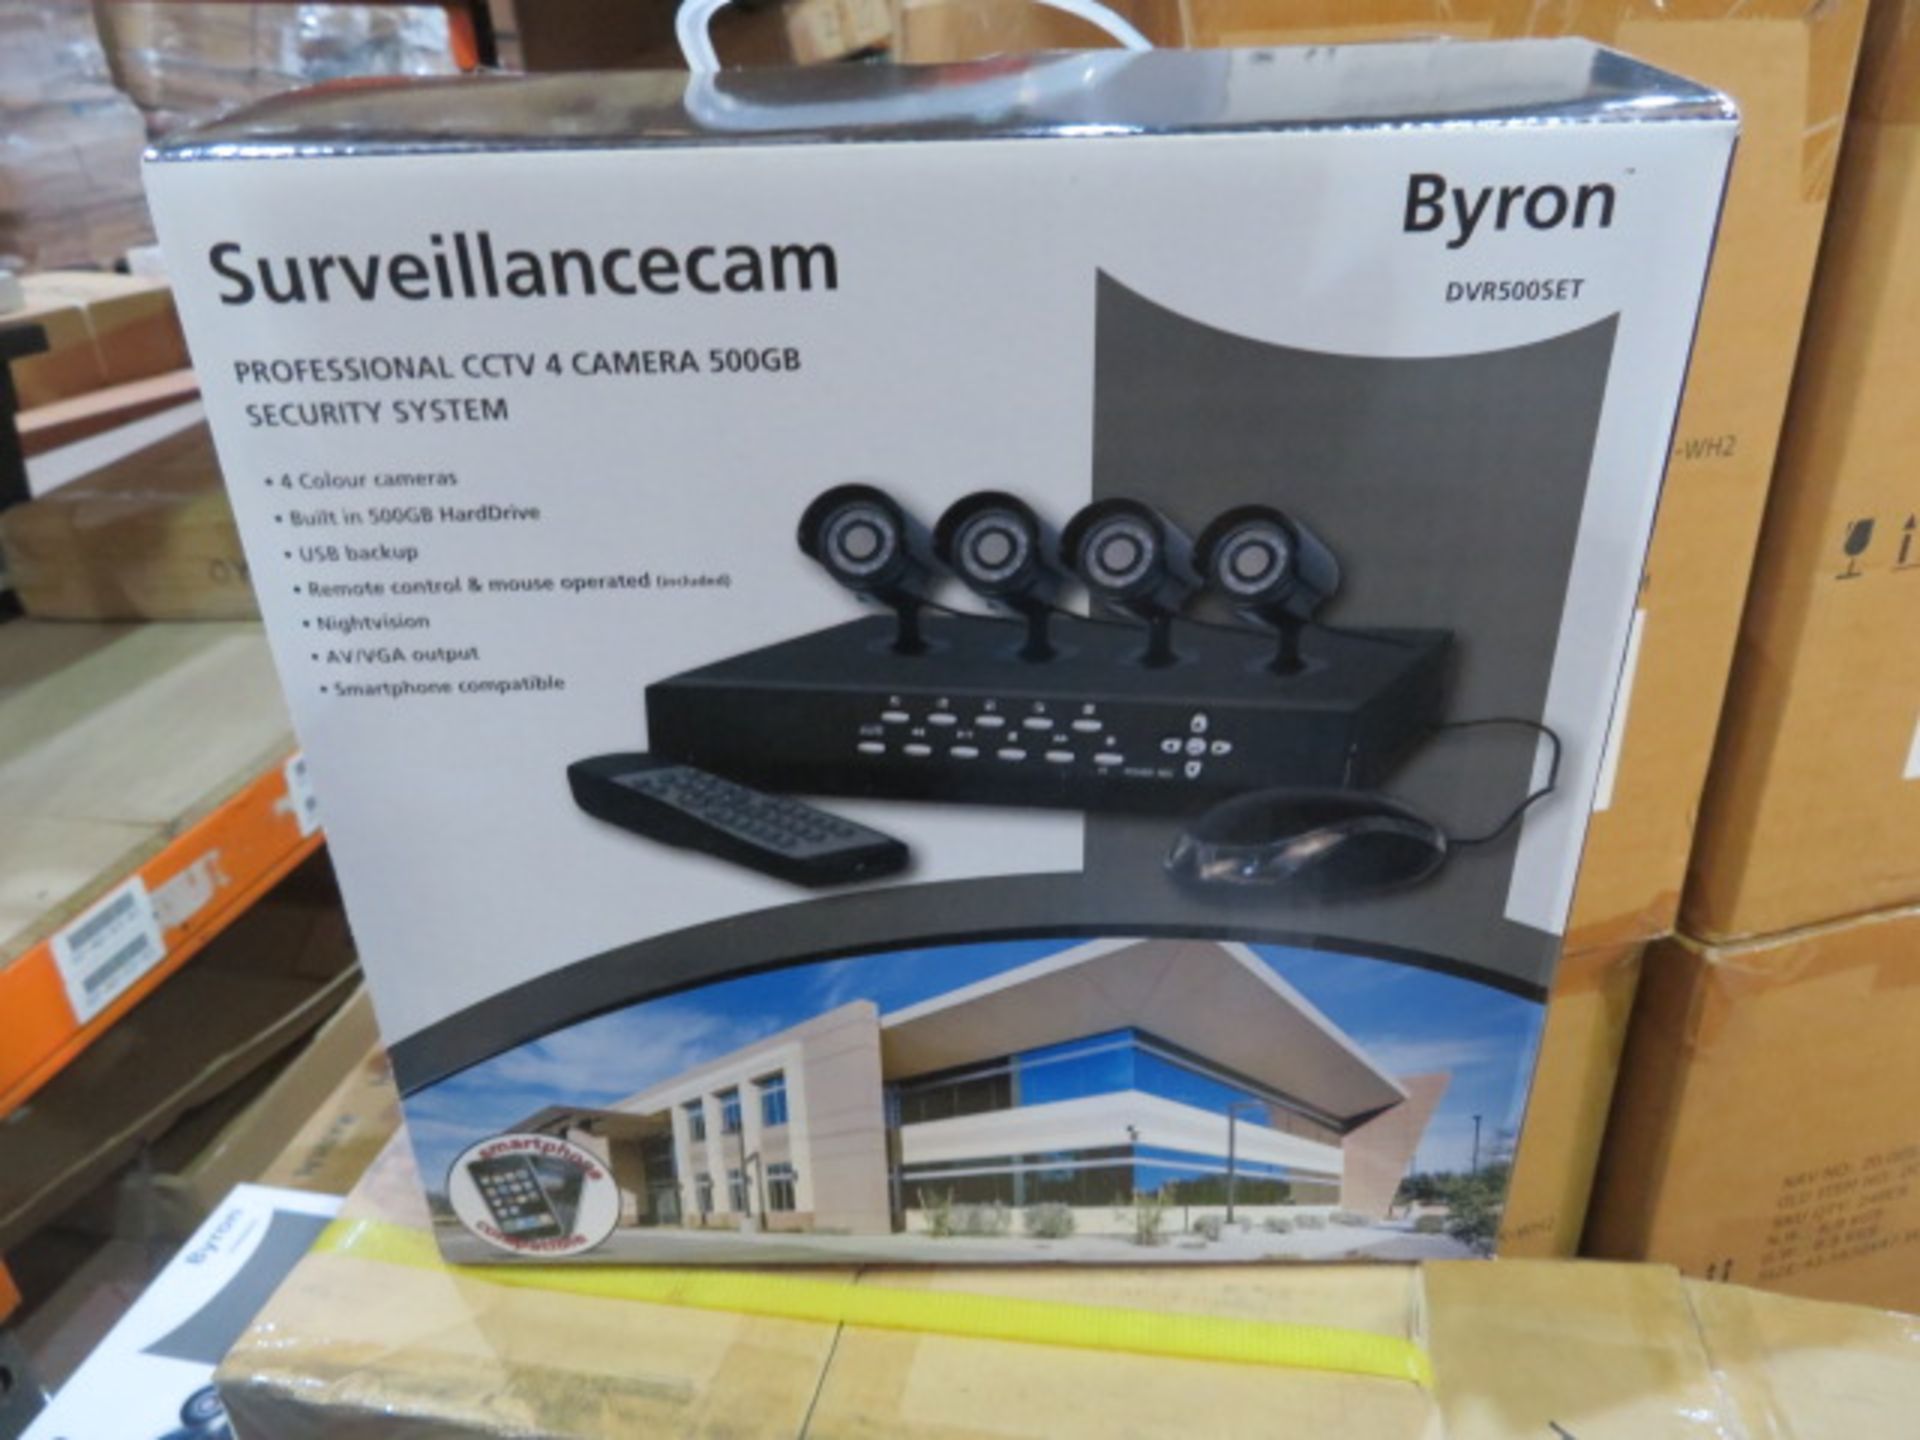 New & Boxed Byron Dvr500Set. Professional Cctv System. 4 Camera 500Gb. 4 Colour Cameras, Bui... - Image 4 of 4